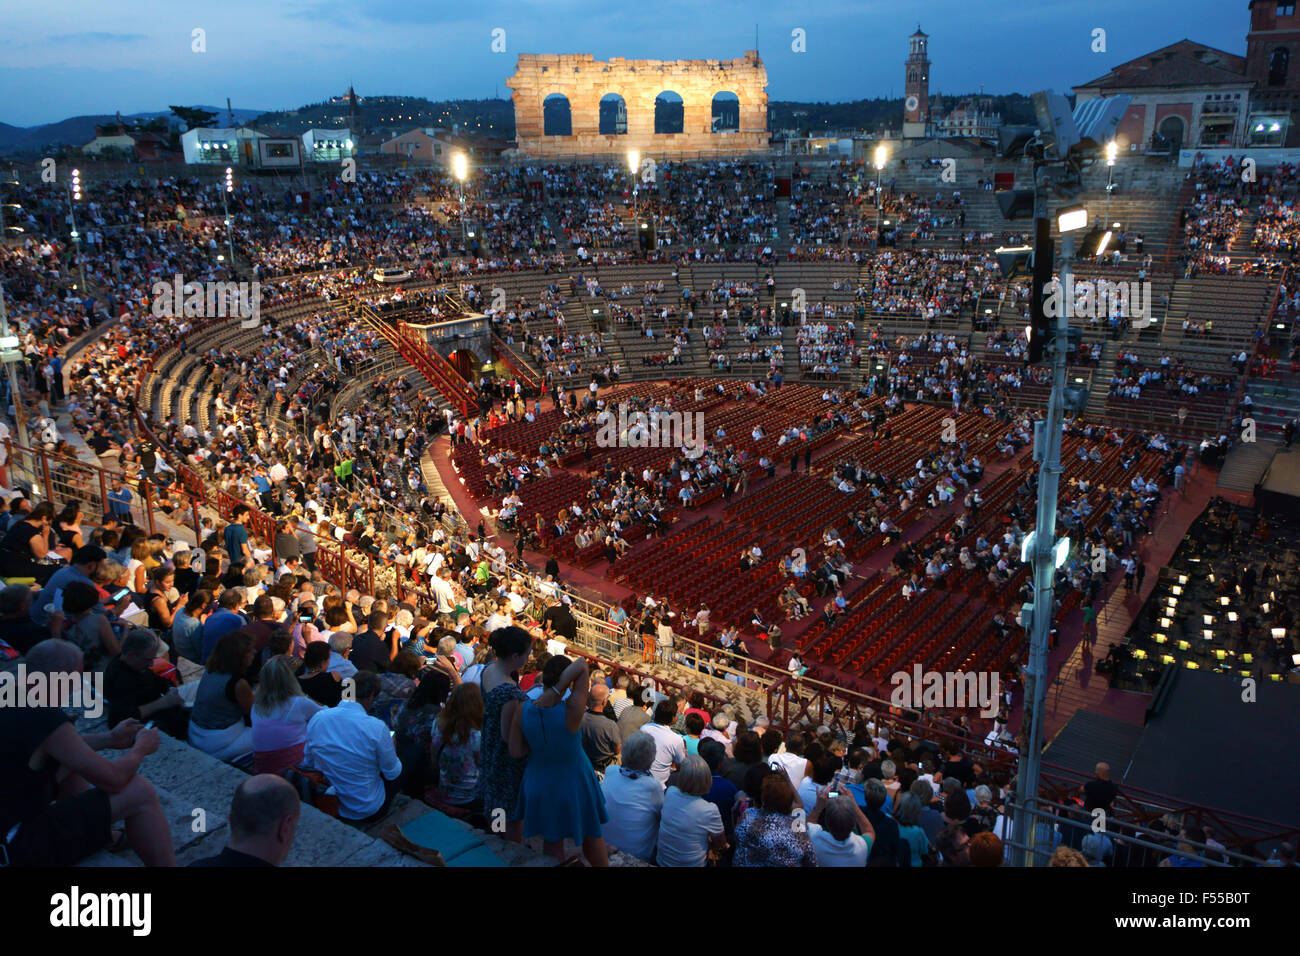 Spectators in Roman Amphitheatre viewing Opera 'Nabucco' b G. Verdi, Verona, Veneto, Italy Stock Photo